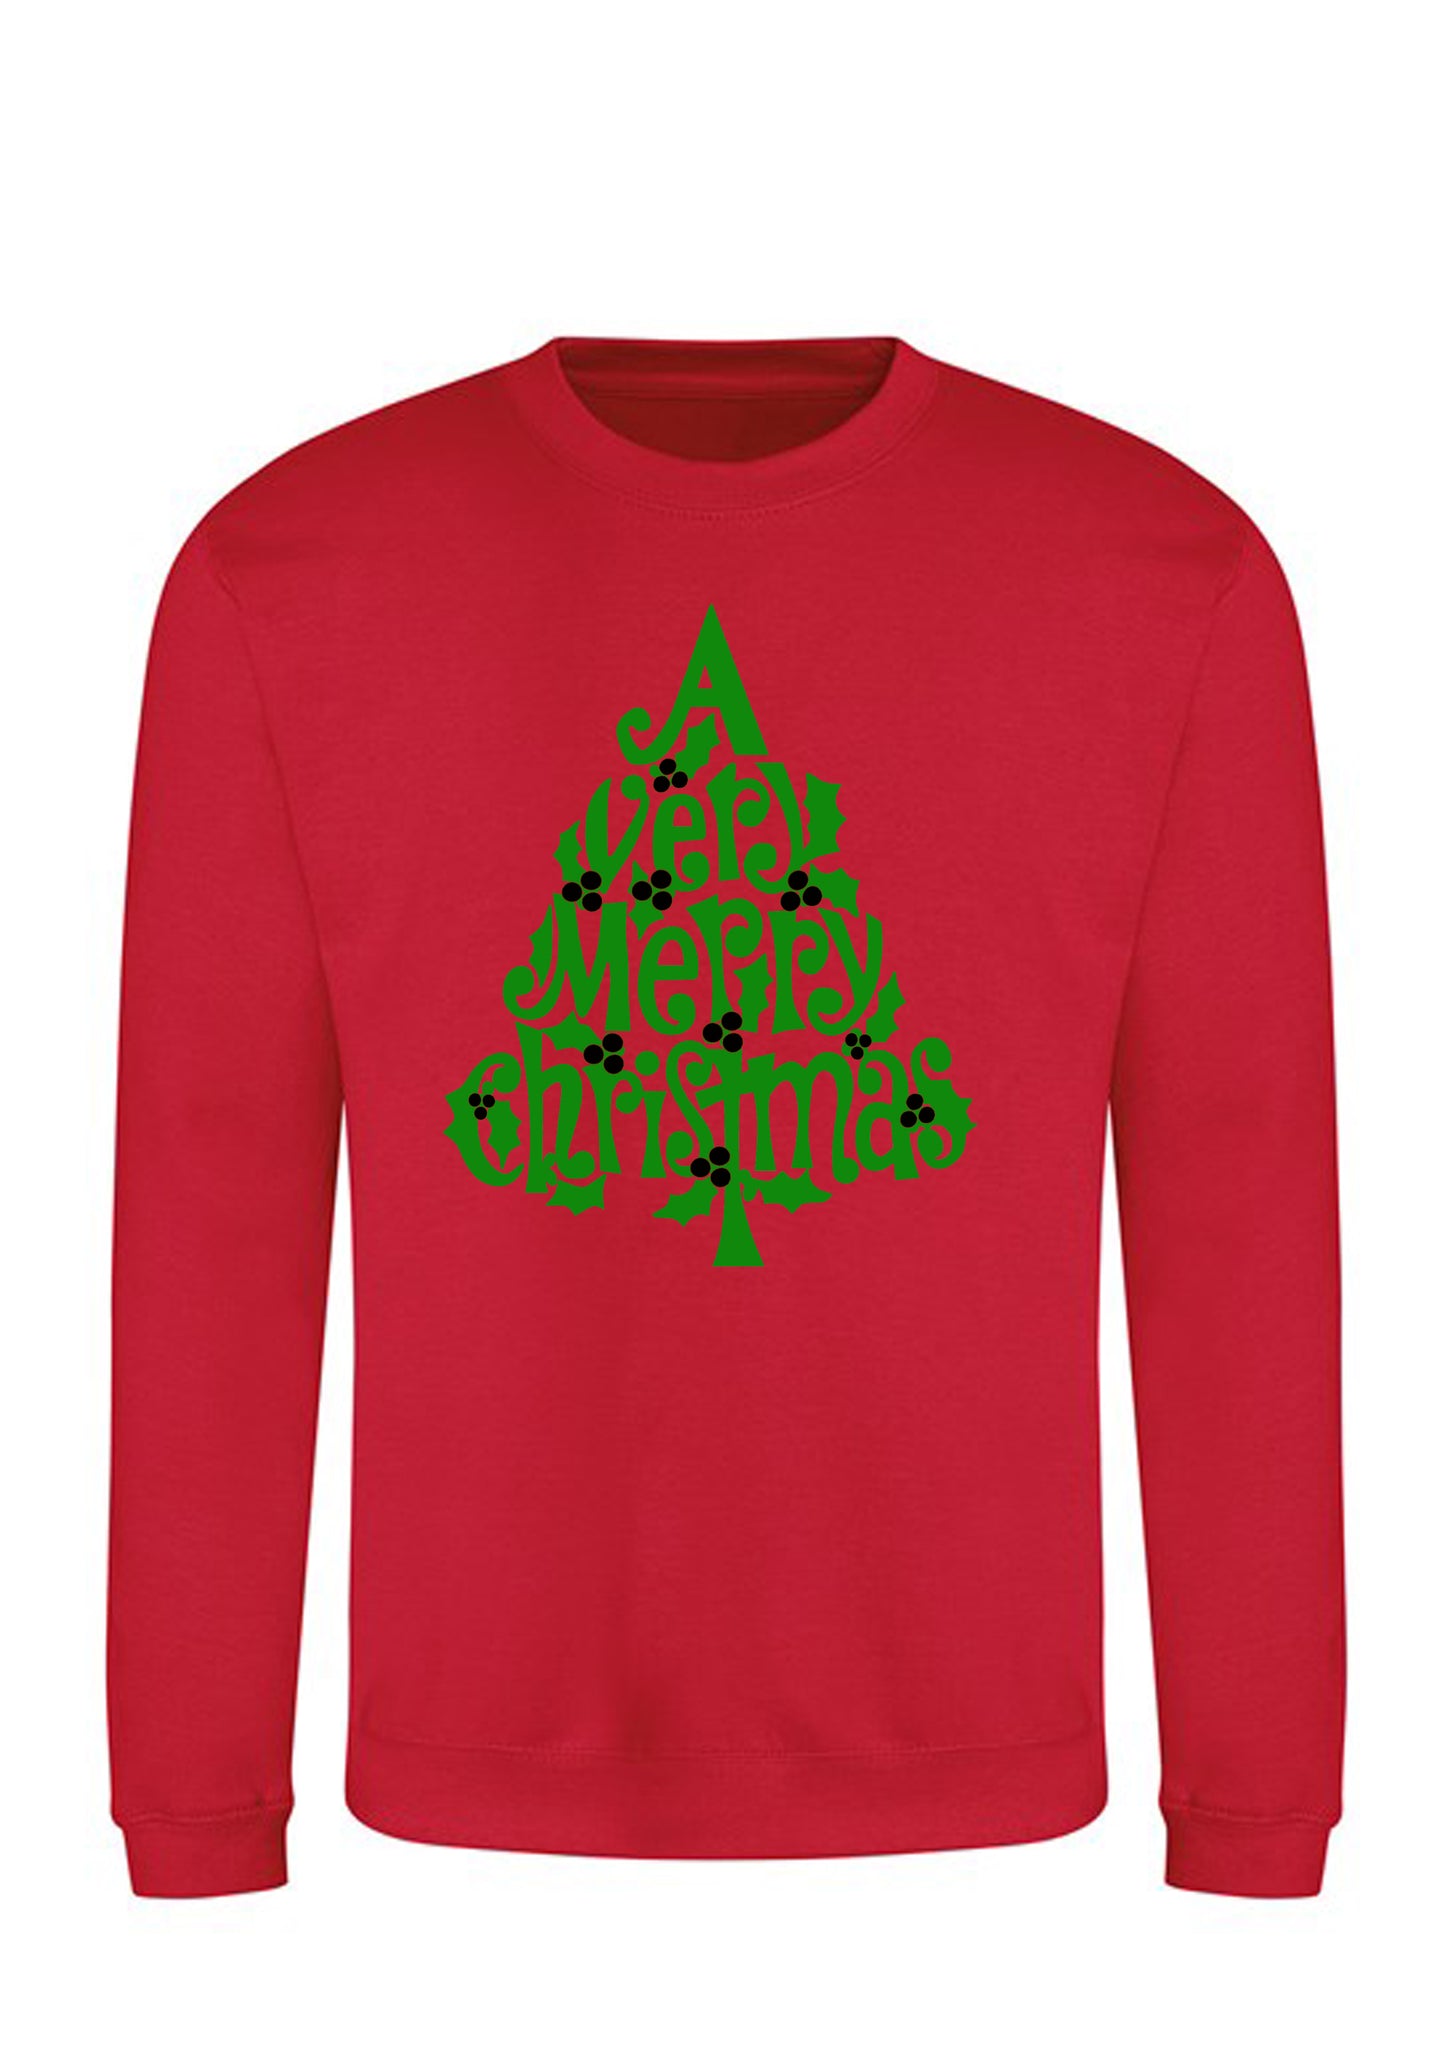 A Very merry christmas Sweatshirt